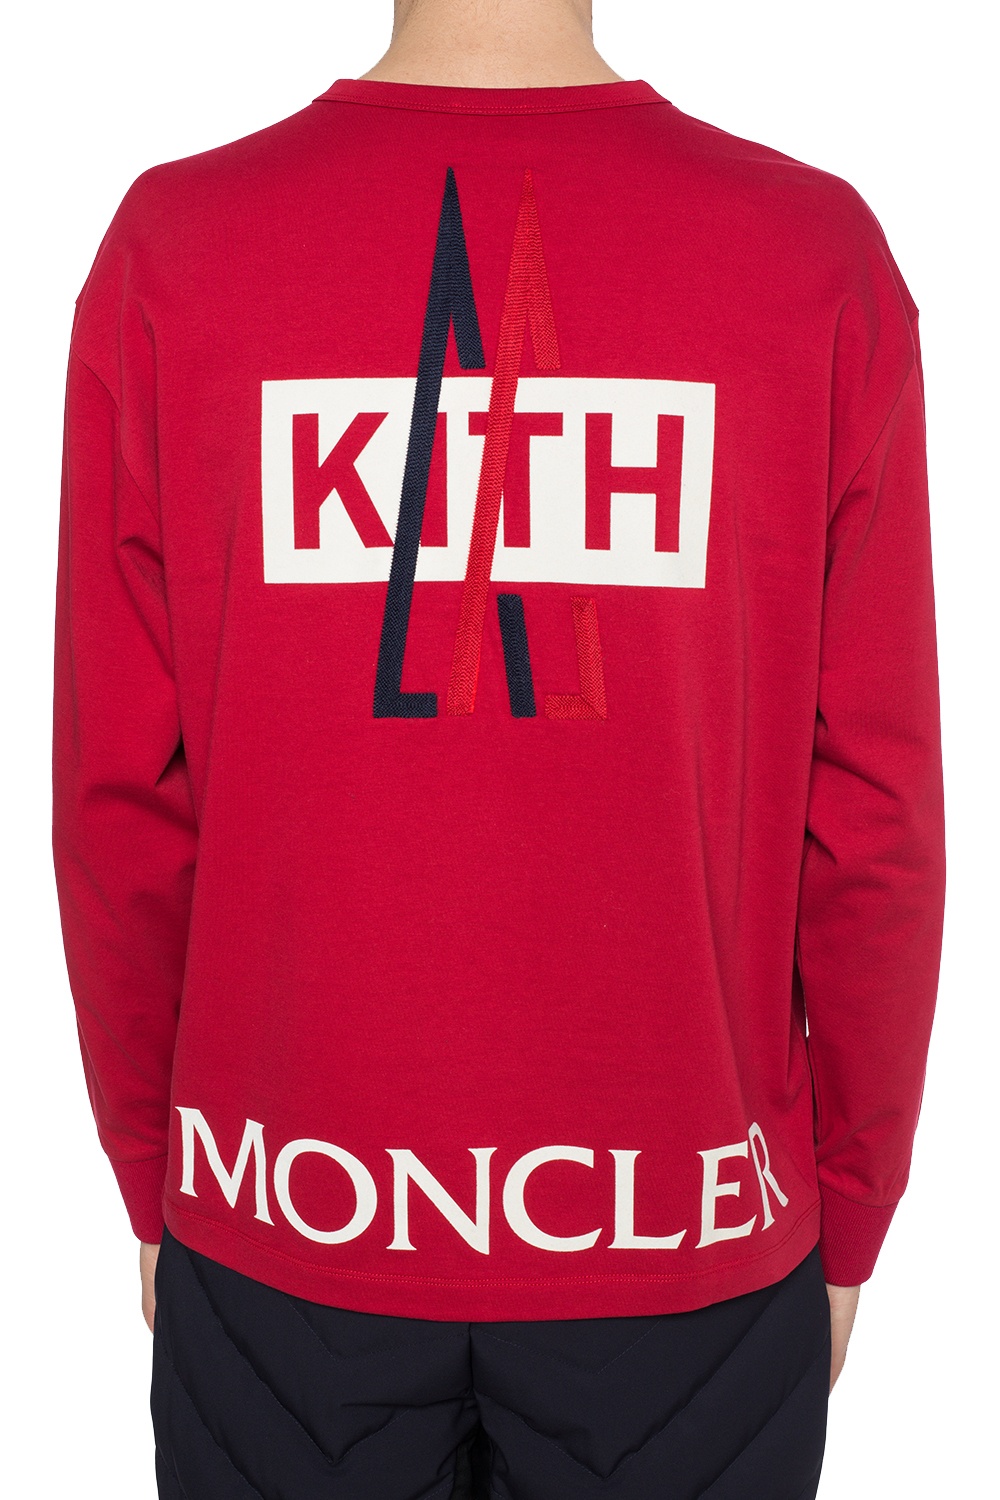 kith x moncler long sleeve